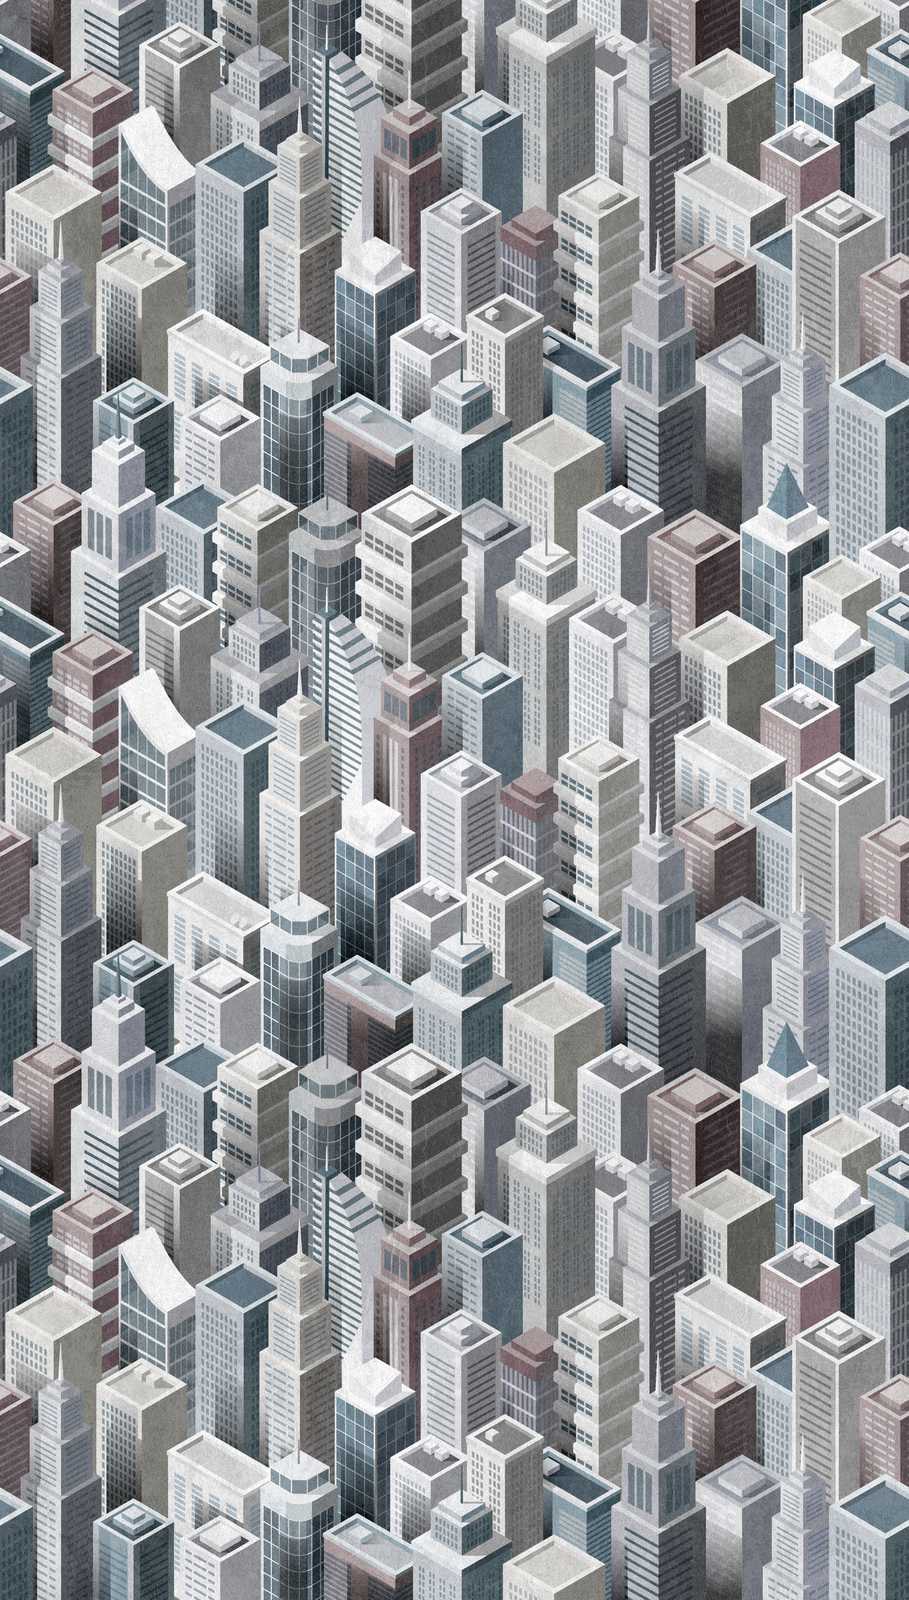             Tapeten Neuheit – Motivtapete Skyscraper 3D Muster Urban
        